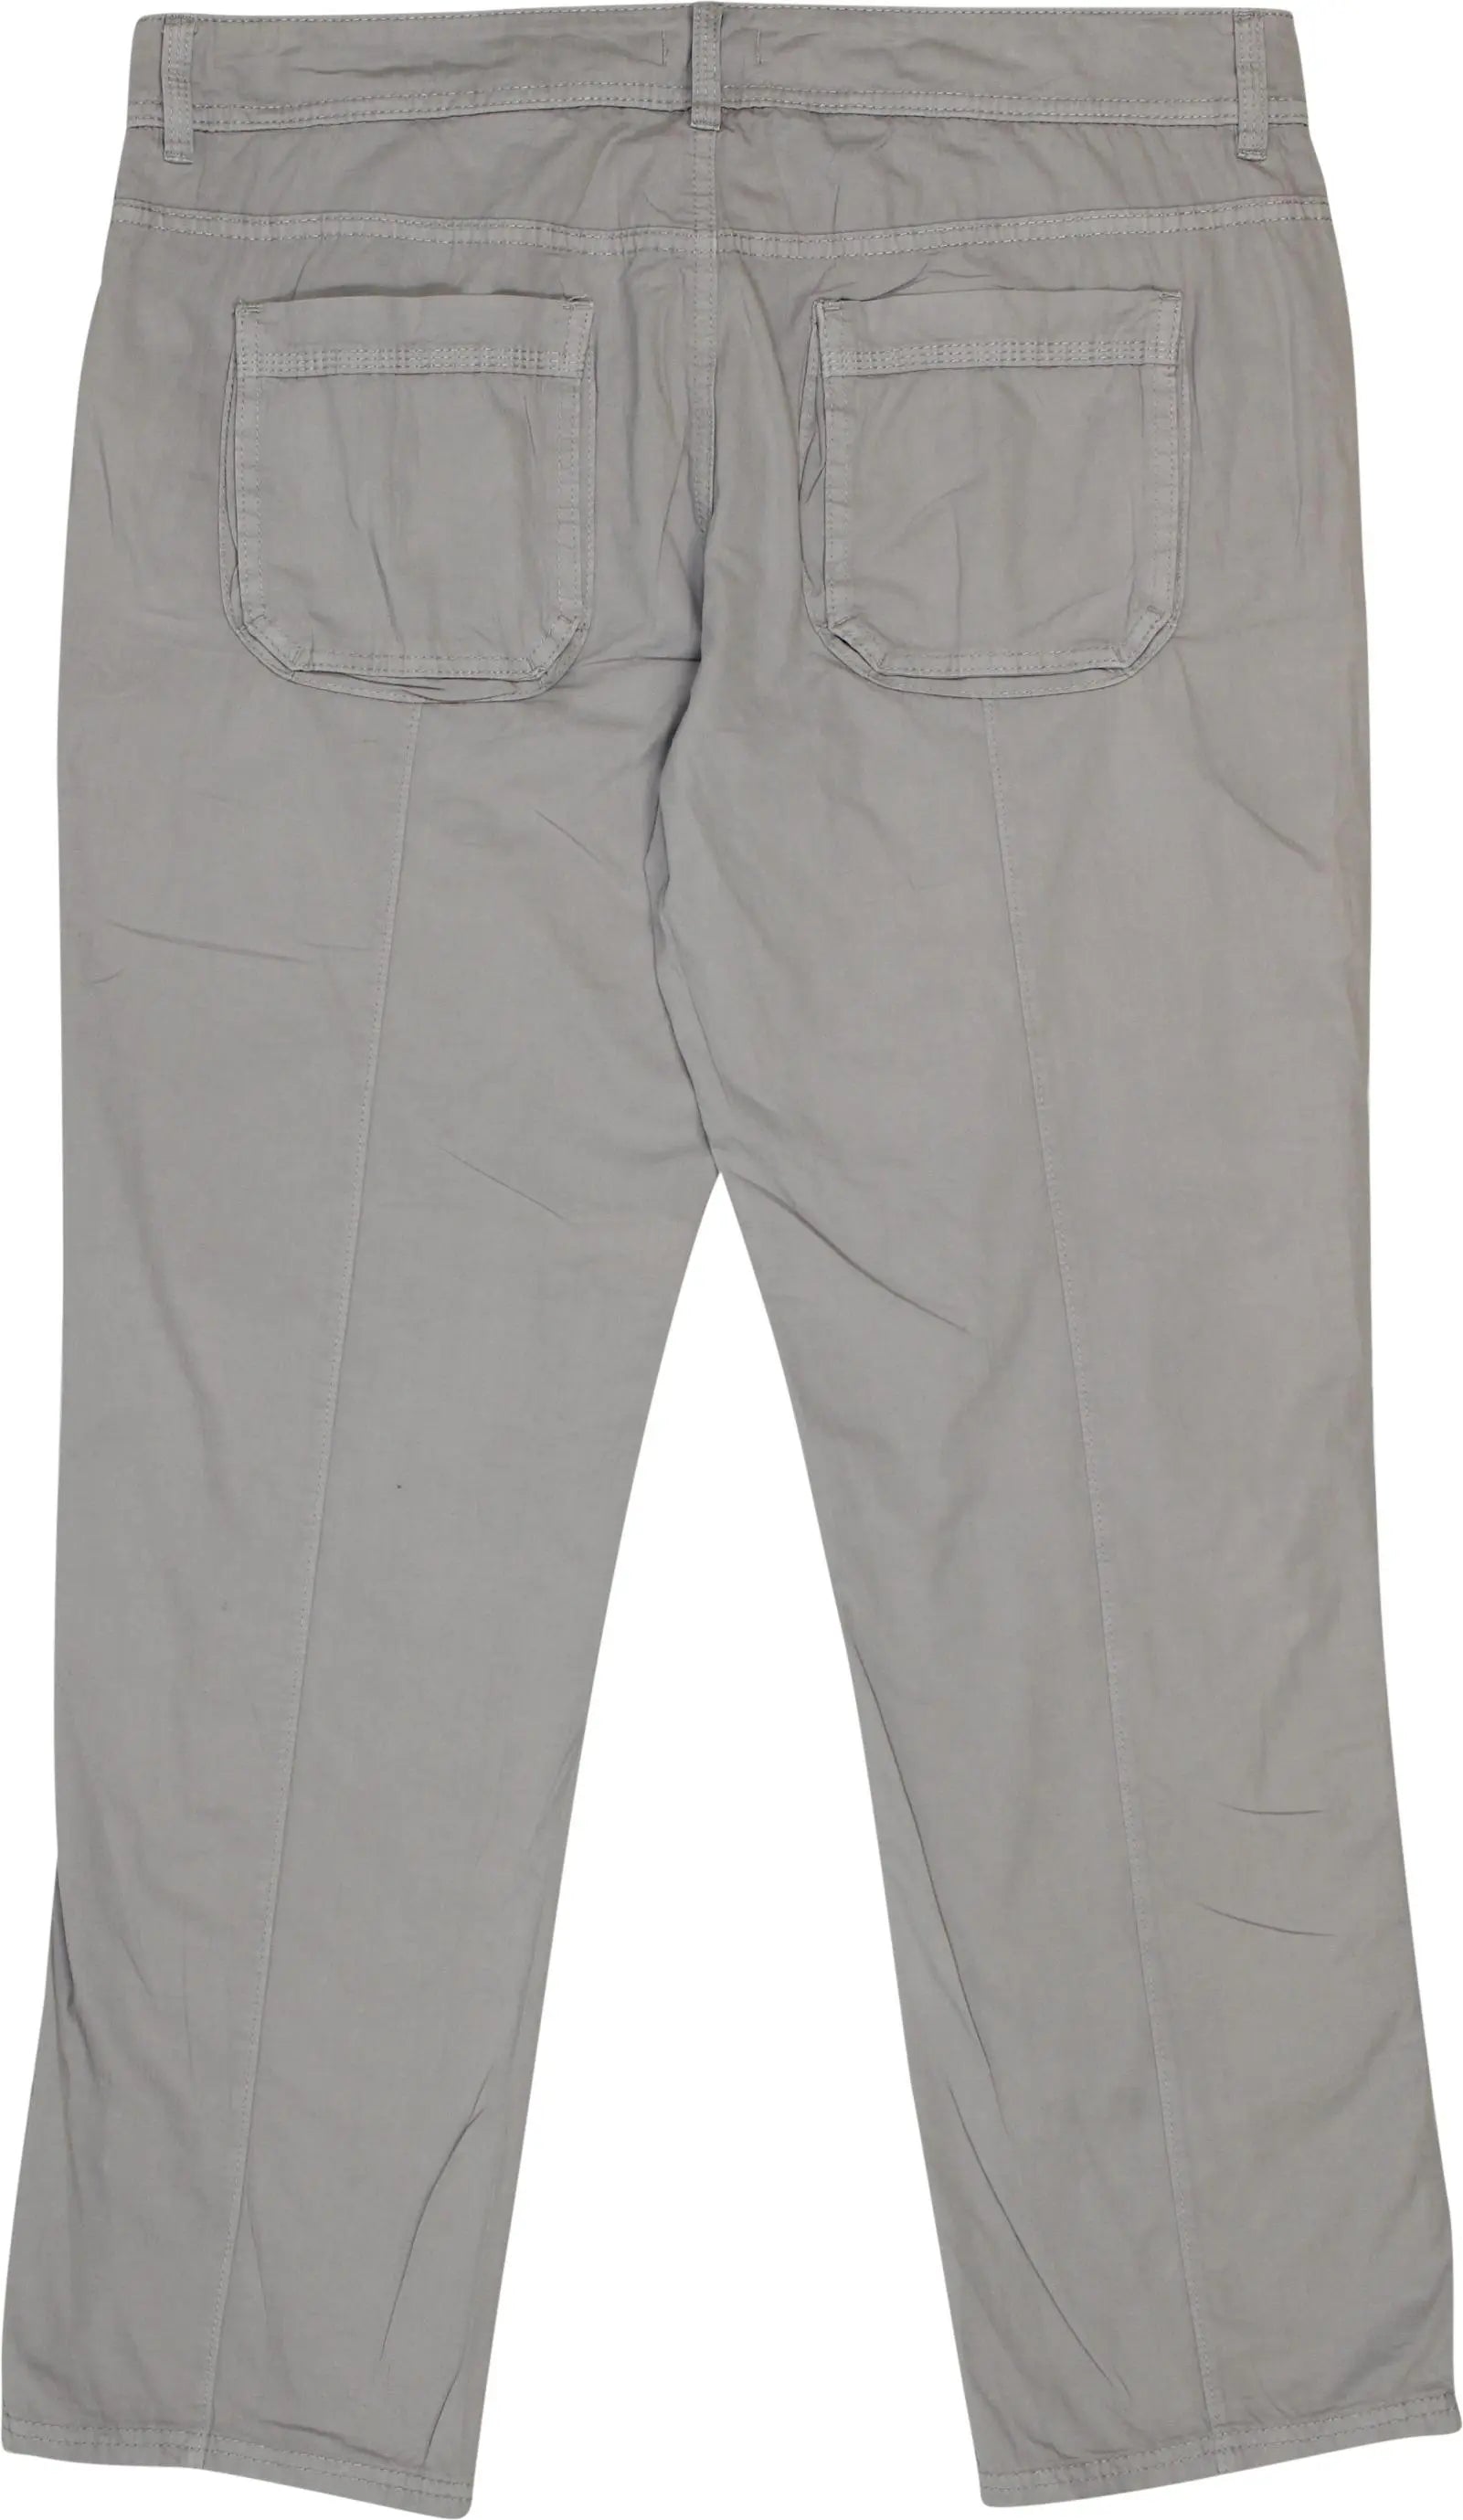 Esprit - Pants- ThriftTale.com - Vintage and second handclothing